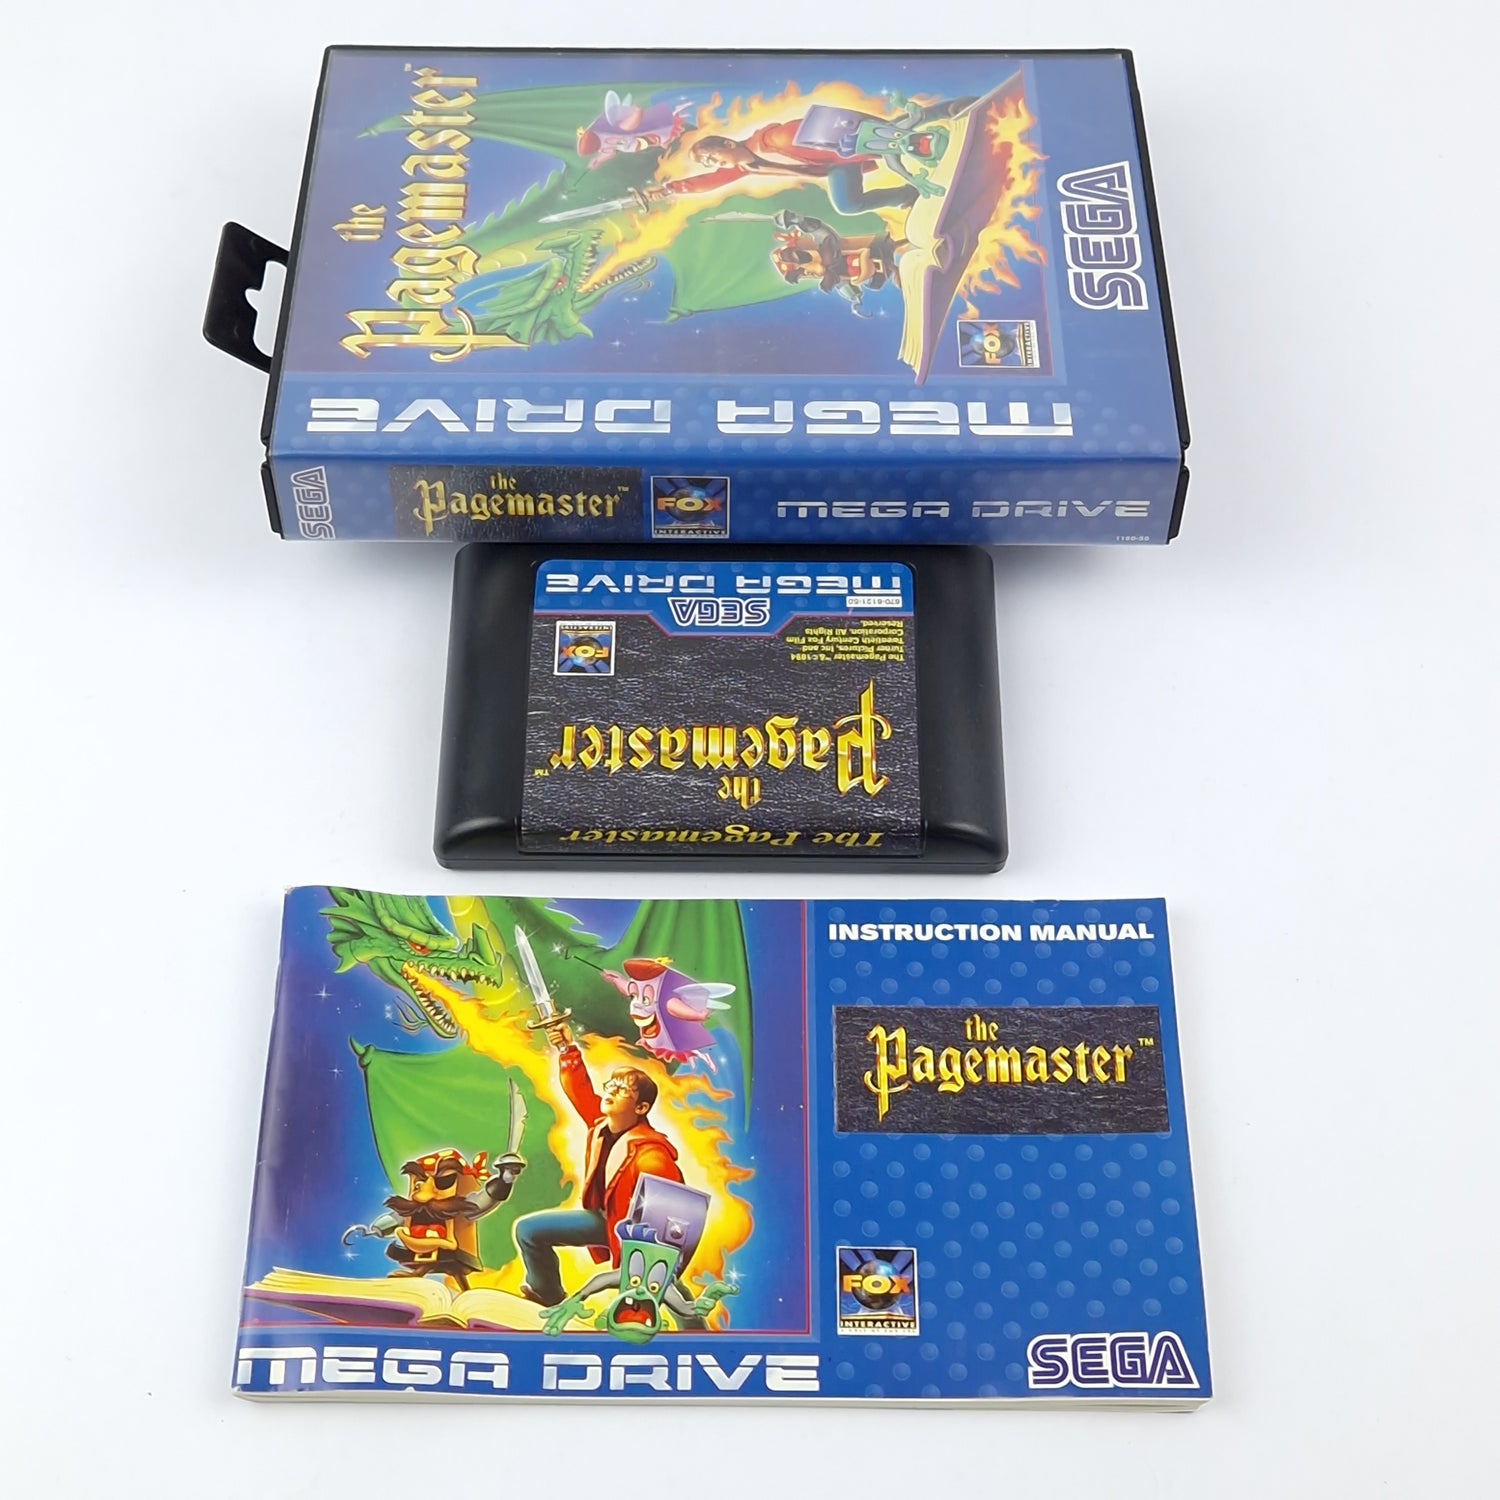 Sega Mega Drive Game: The Pagemaster - OVP Instructions Module | Pal Game